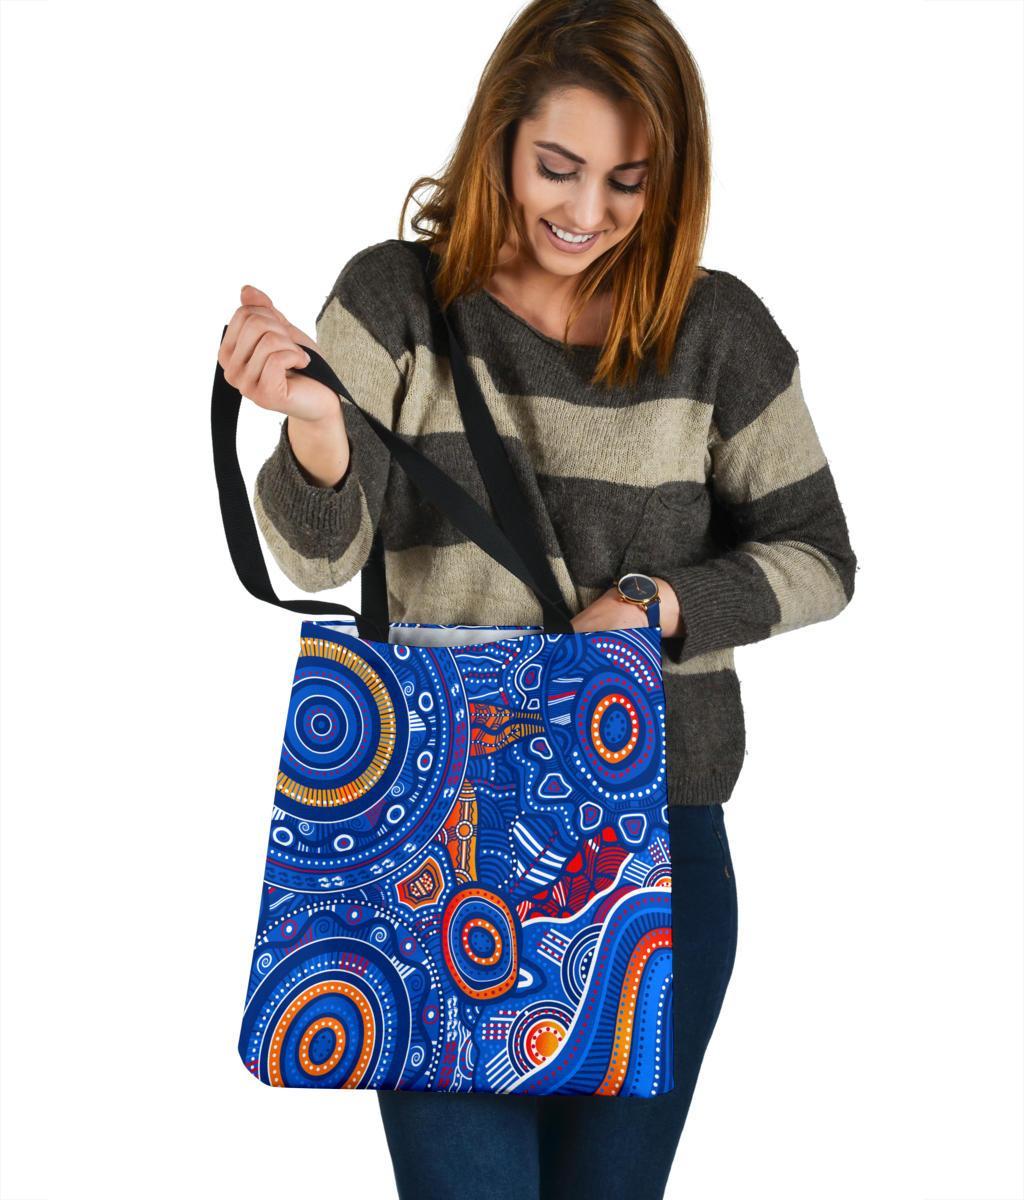 aboriginal-tote-bags-indigenous-footprint-patterns-blue-color